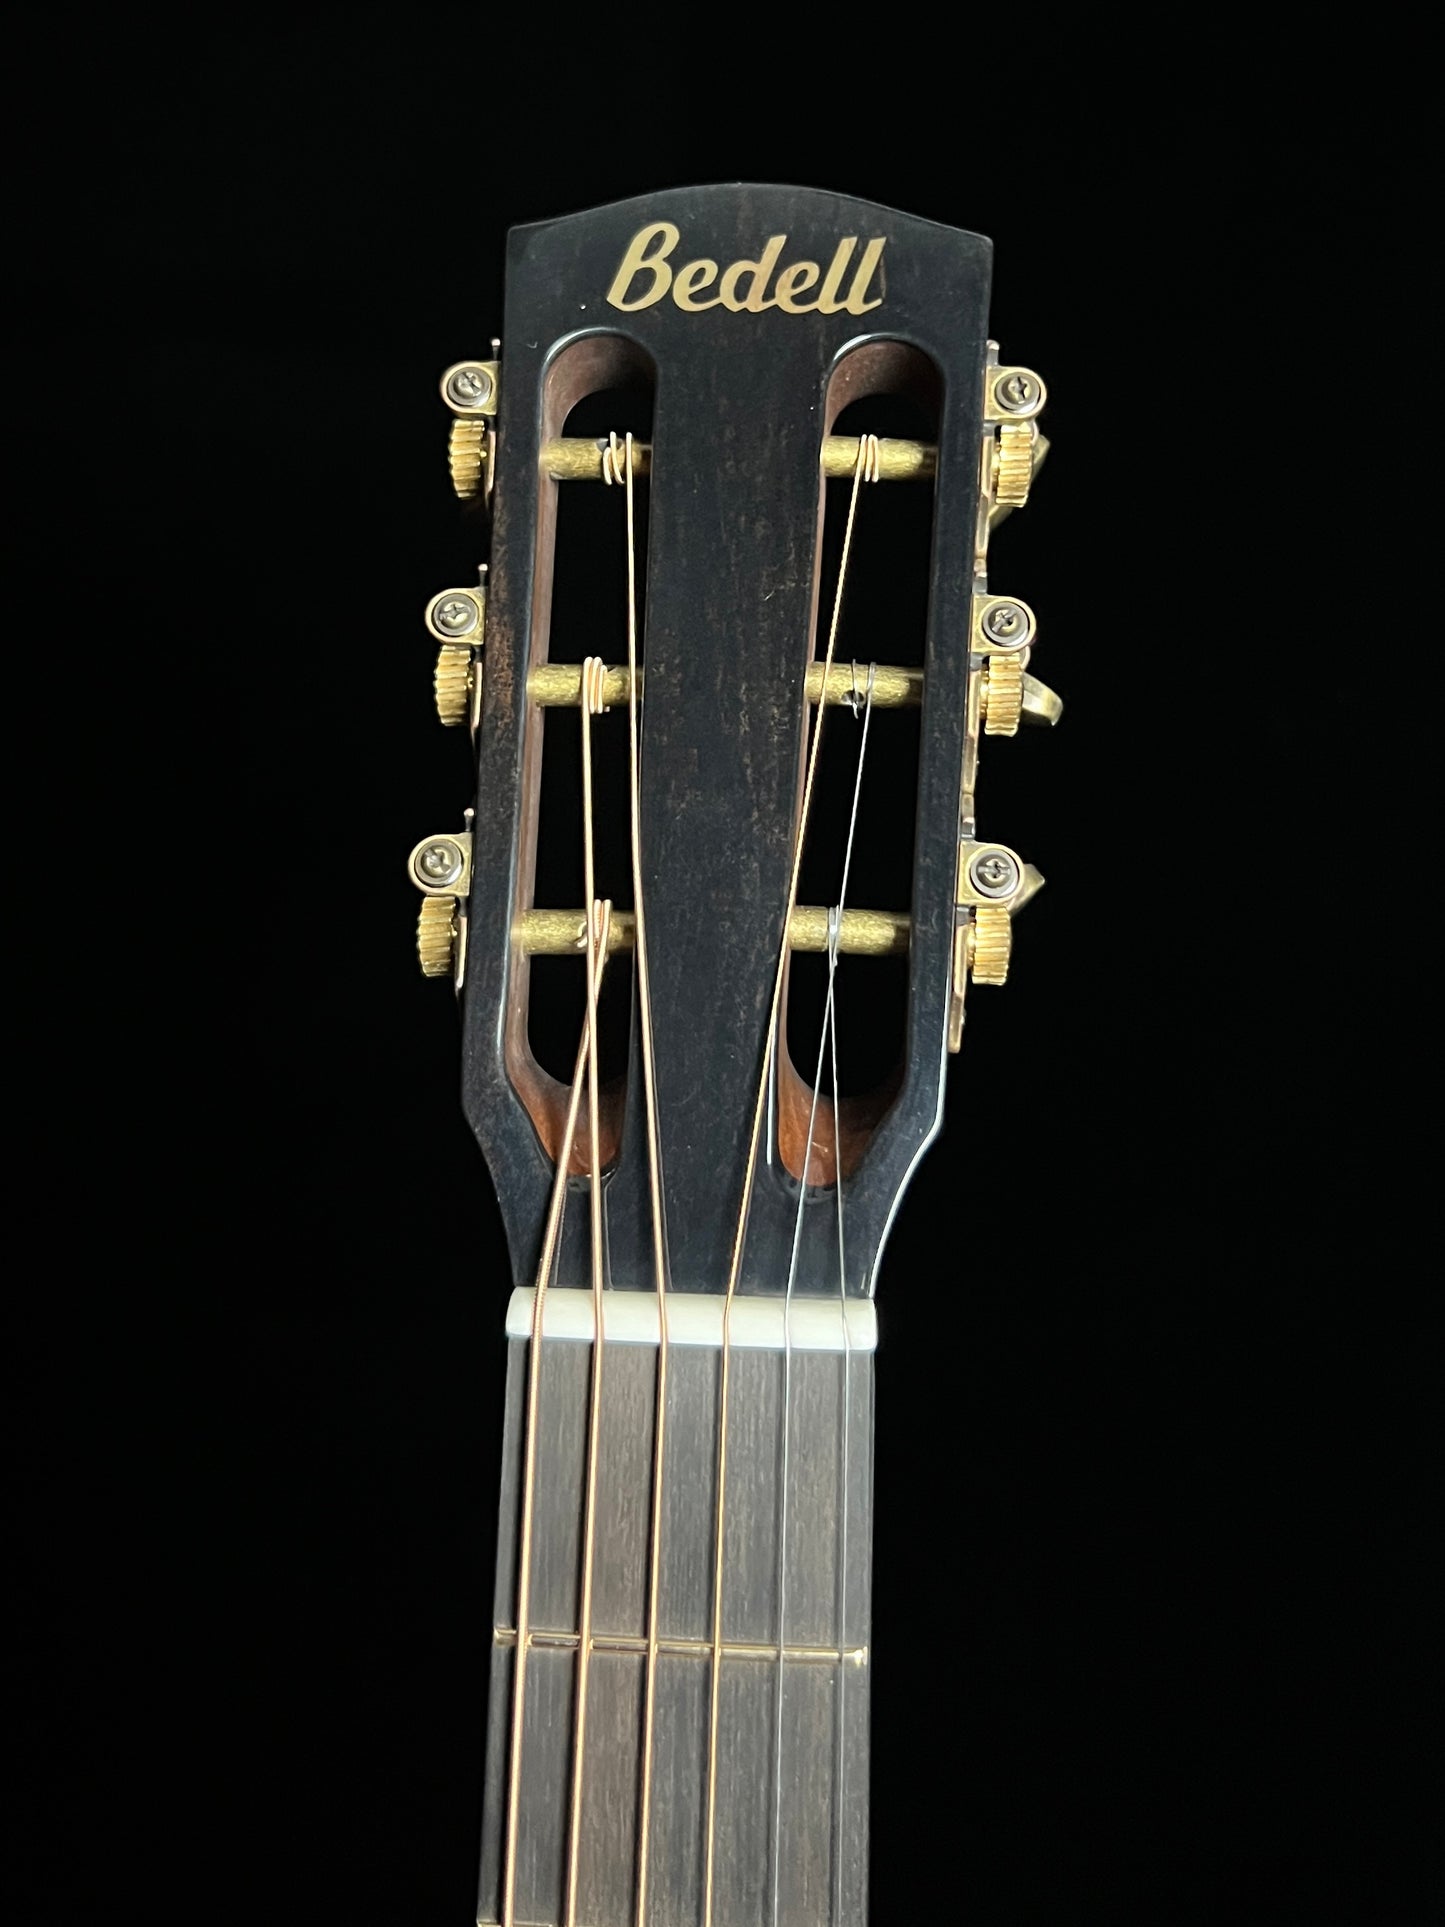 Bedell 1964 Parlor Special Edition - Natural Adirondack Spruce/Honduran Mahogany Acoustic Guitar with K&K Pure Mini - New